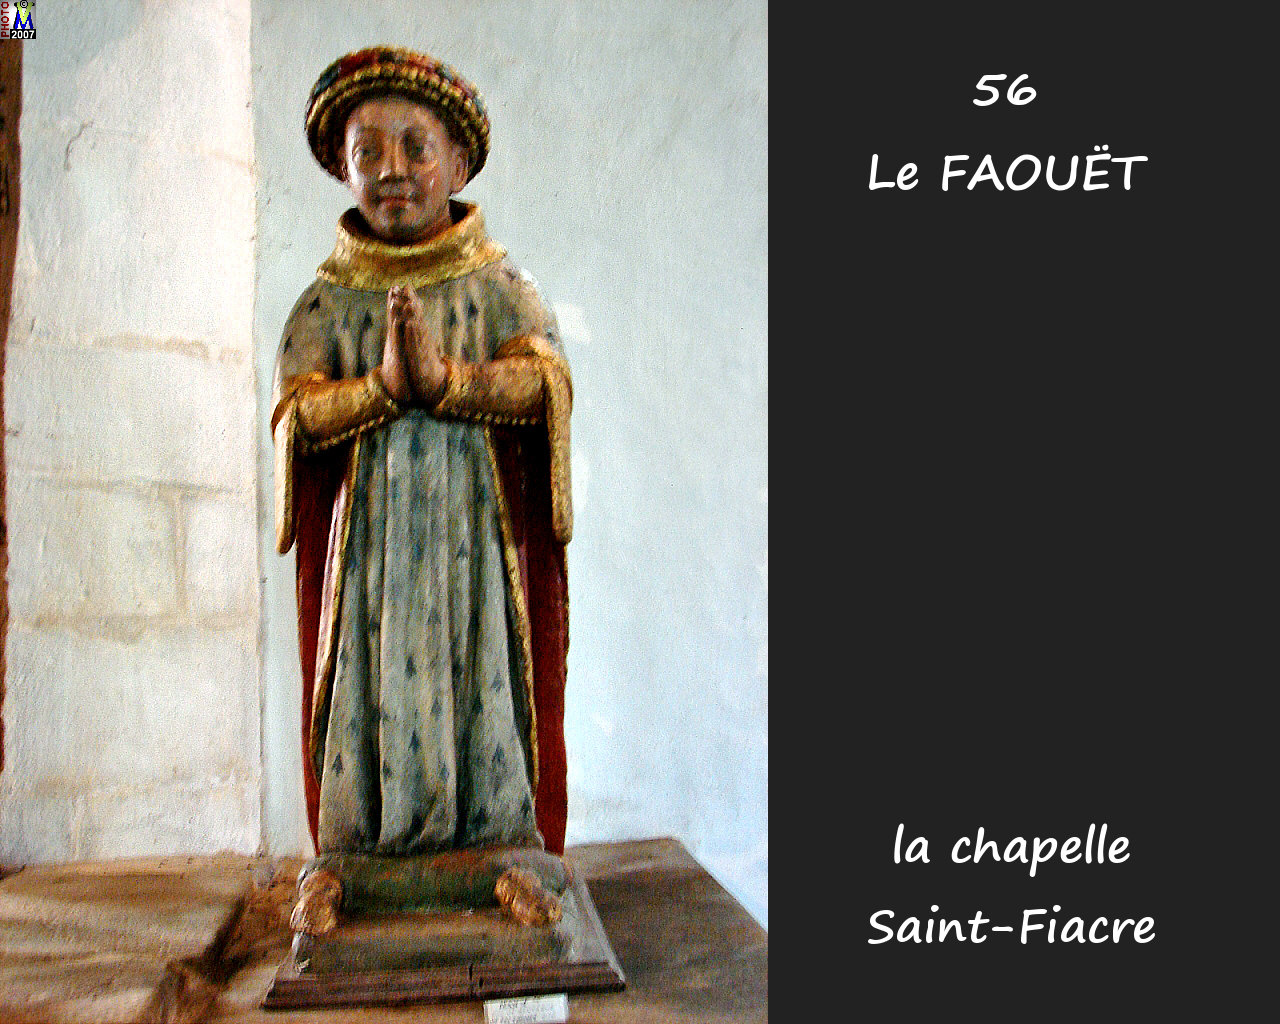 56FAOUET_chapelle-fiacre_342.jpg